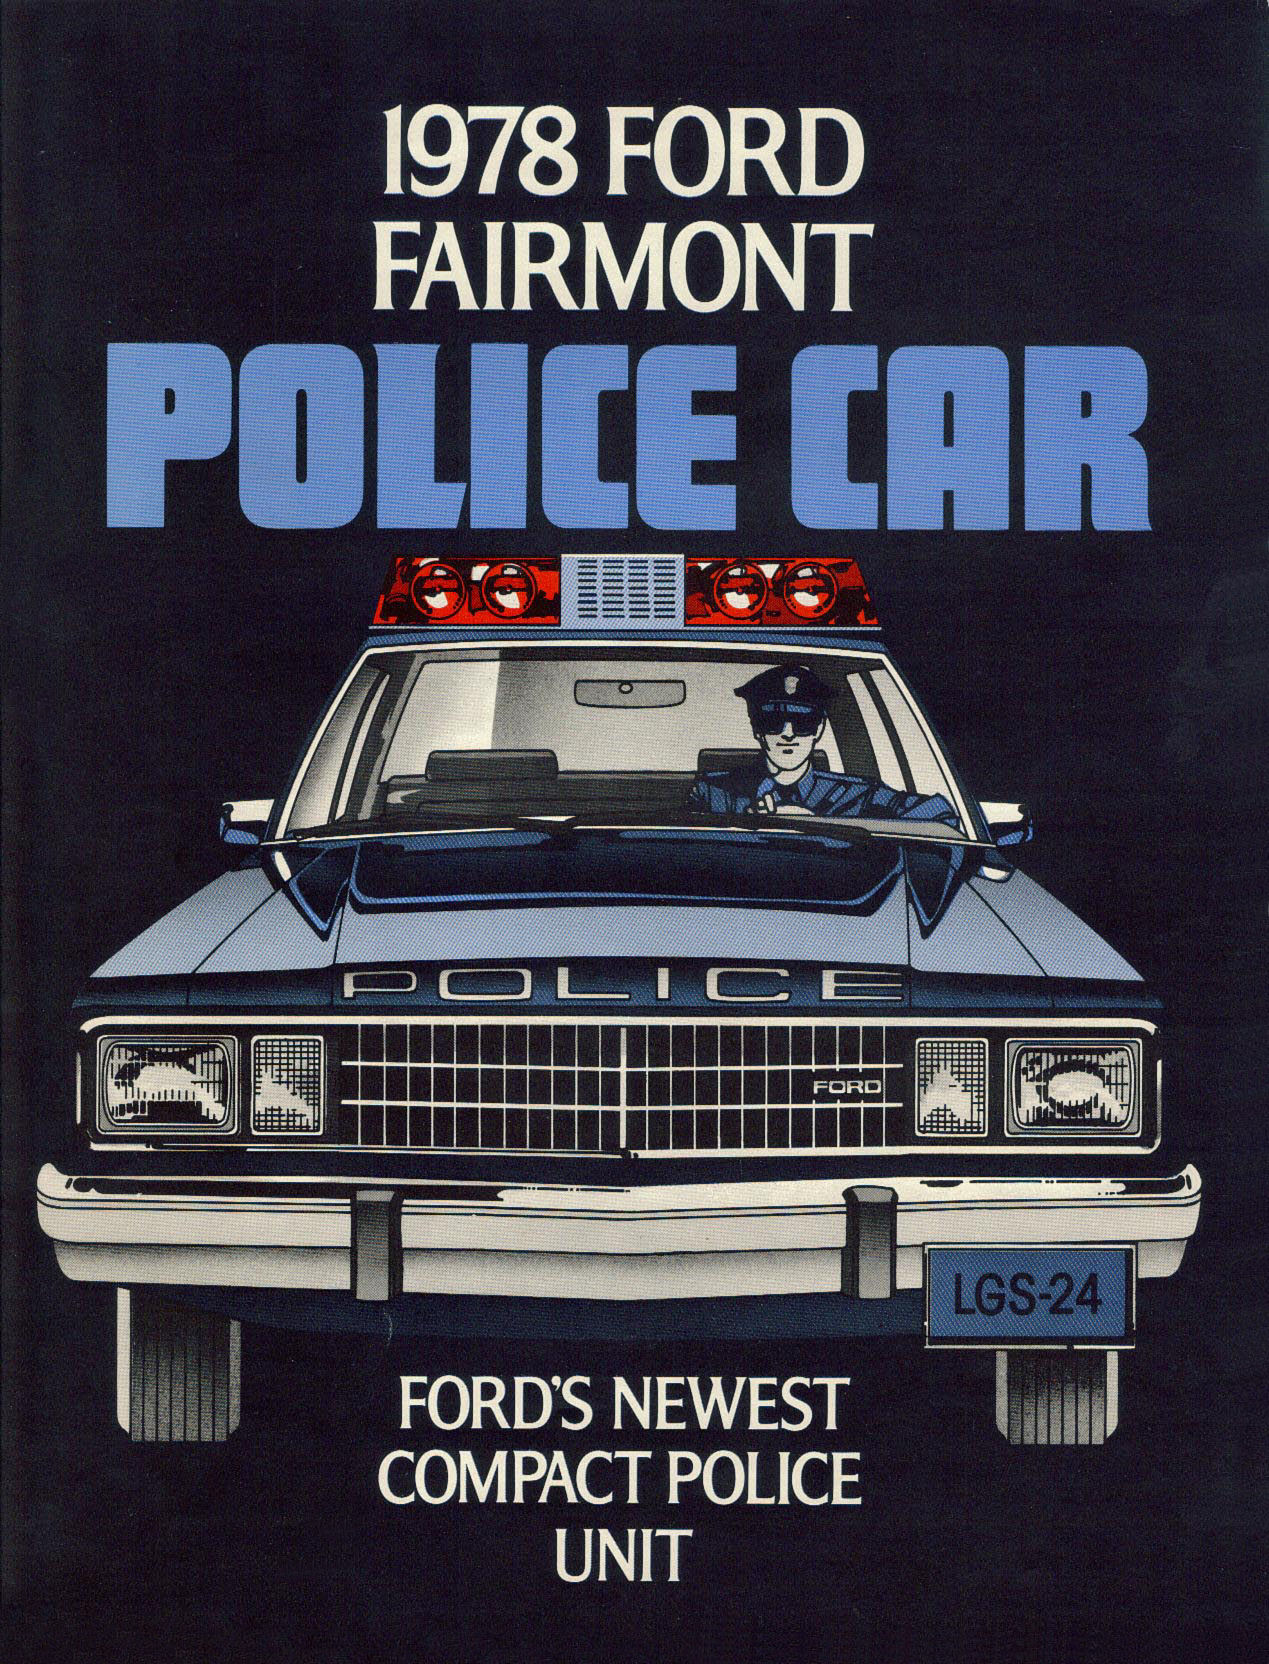 Ford fairmont police car #10